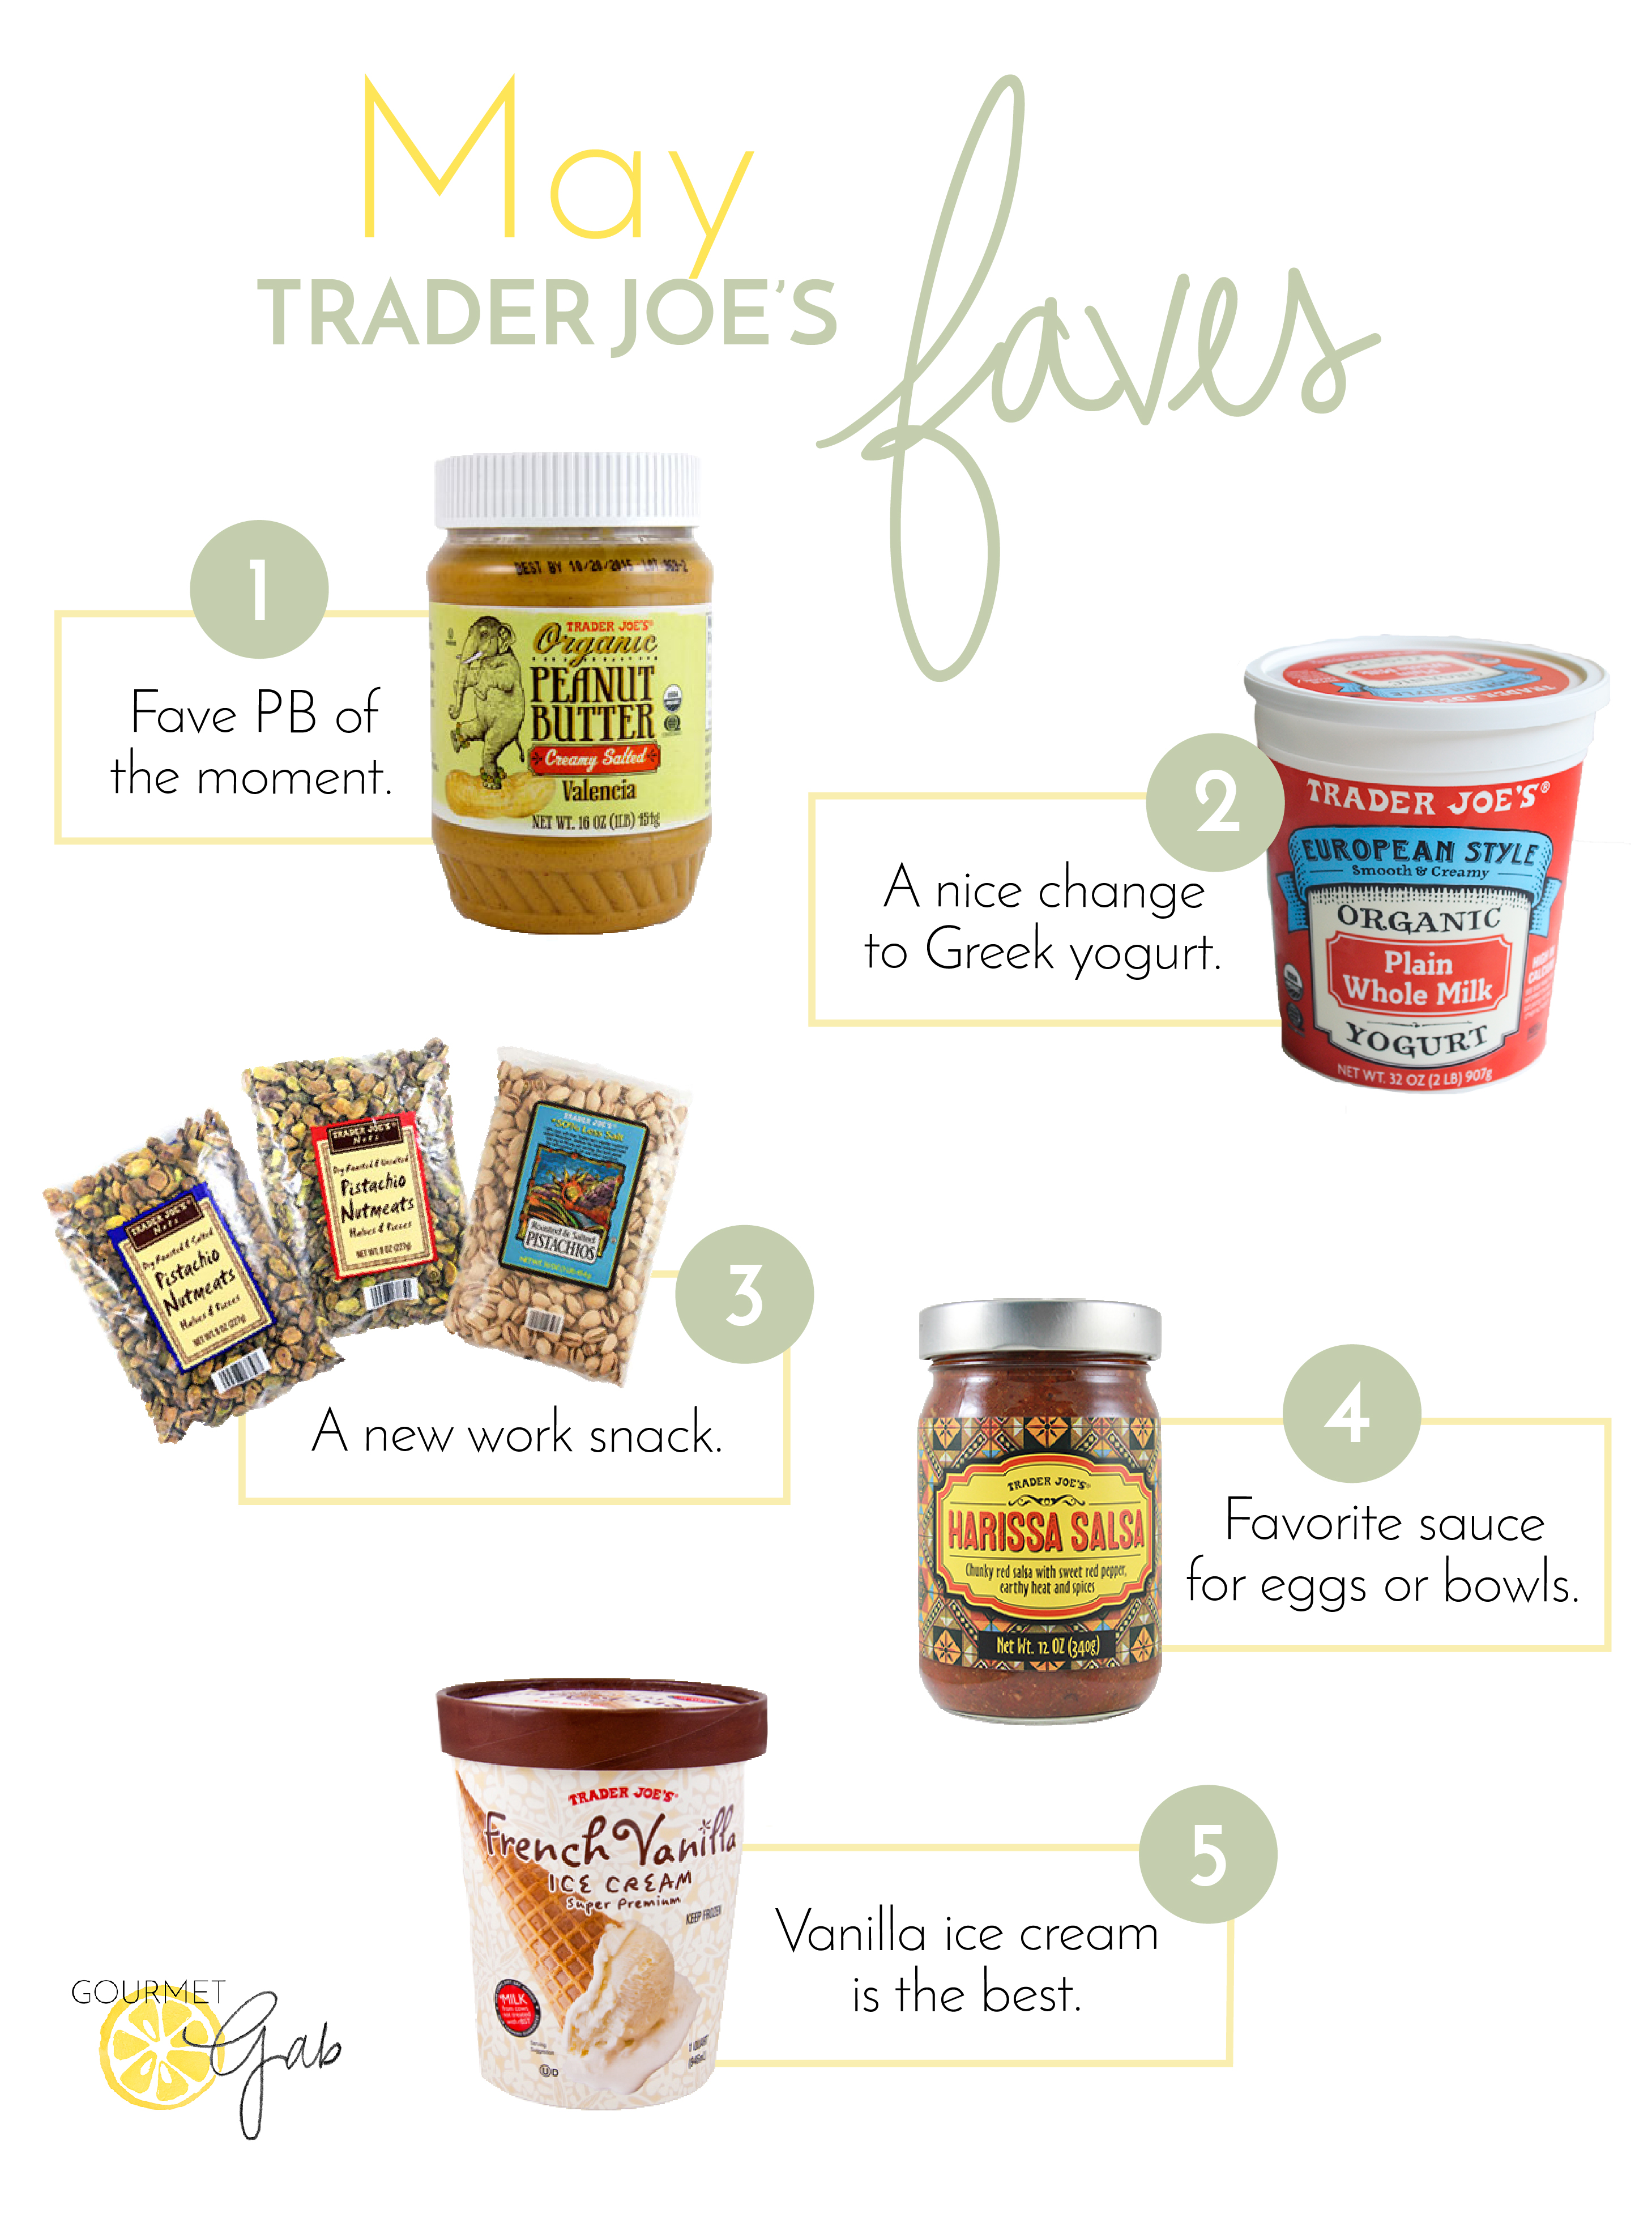 Gourmet Gab May Trader Joe's Favorites